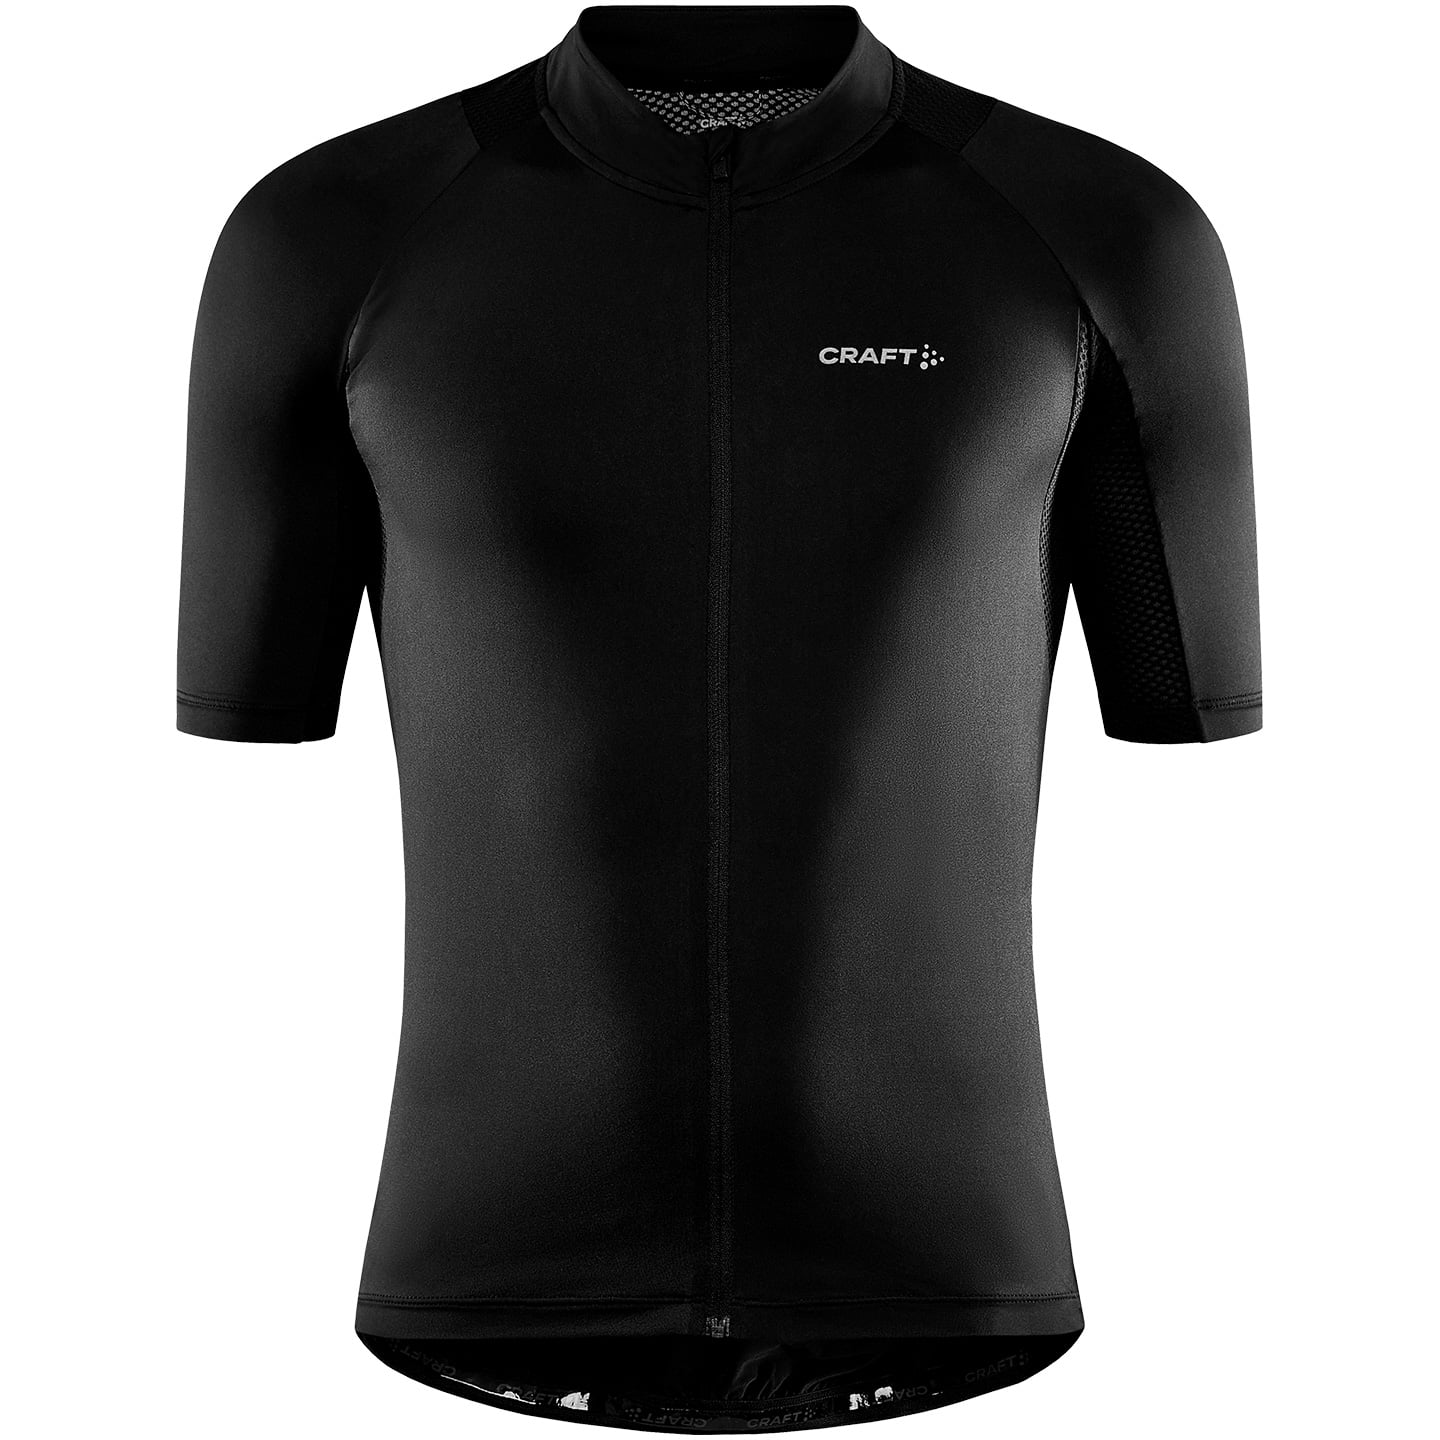 CRAFT ADV Endur Short Sleeve Jersey Short Sleeve Jersey, for men, size M, Cycling jersey, Cycling clothing